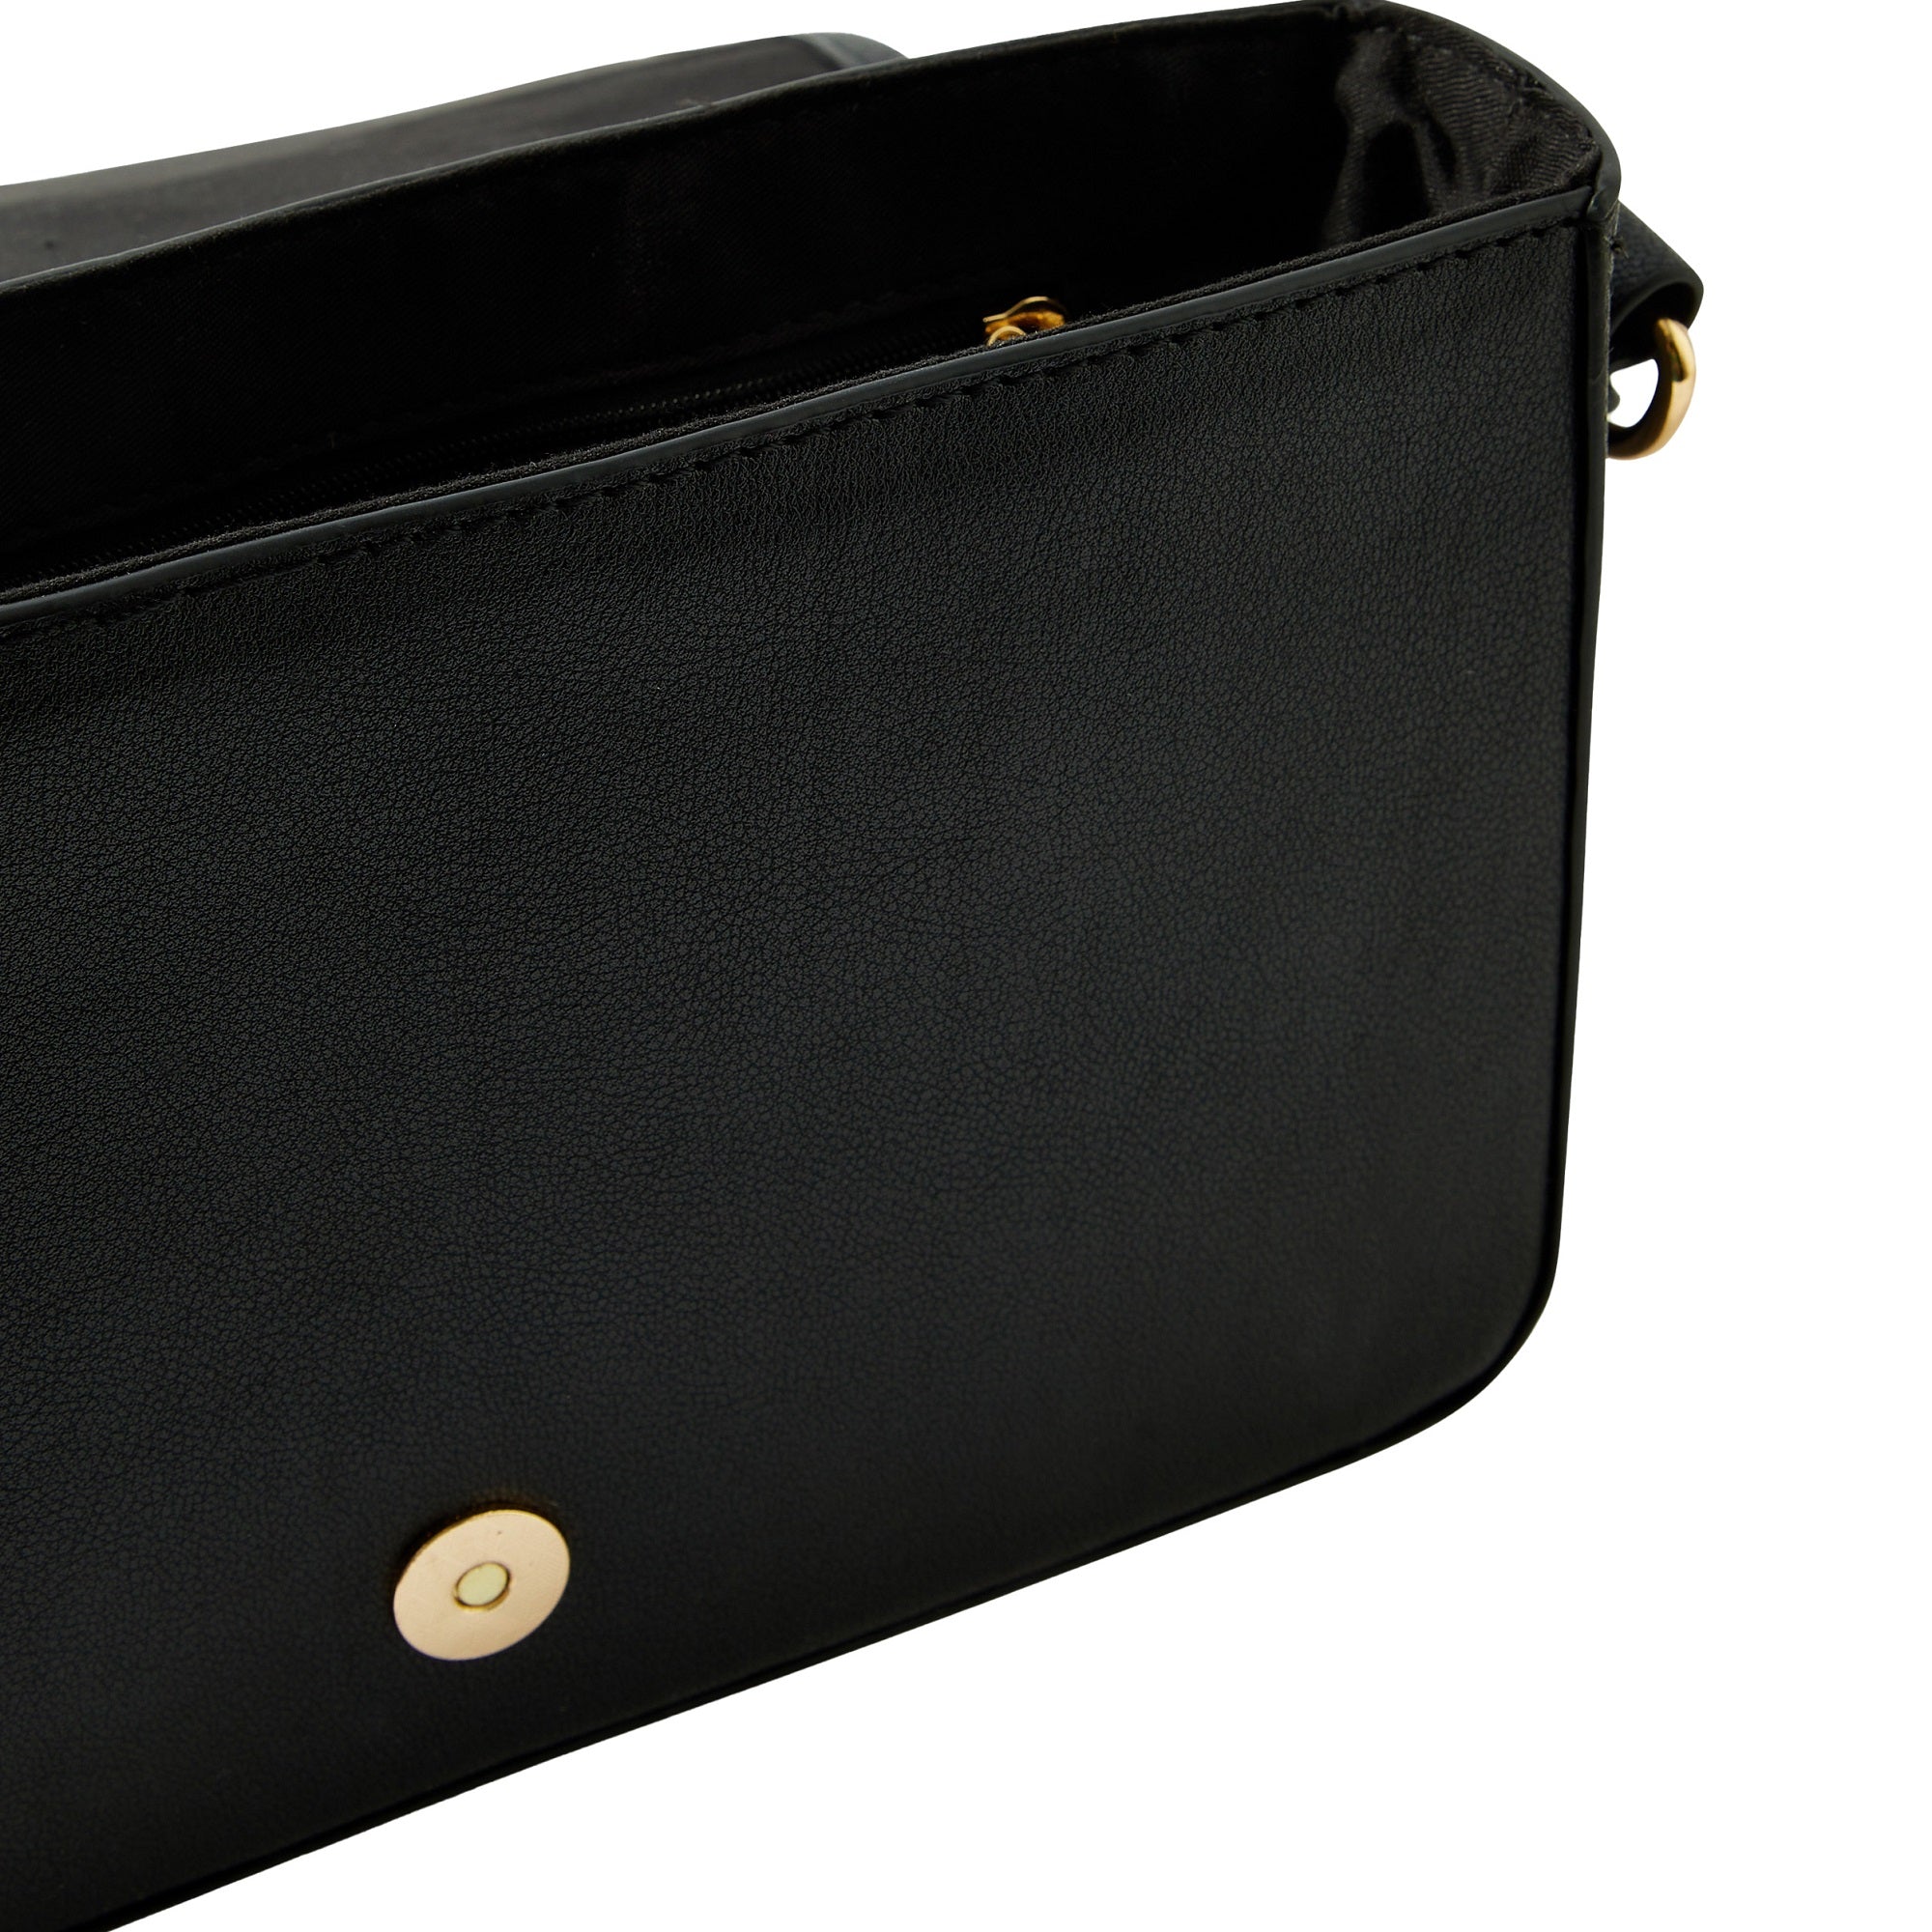 Accessorize London Women's Faux Leather Black Weave Sling Bag